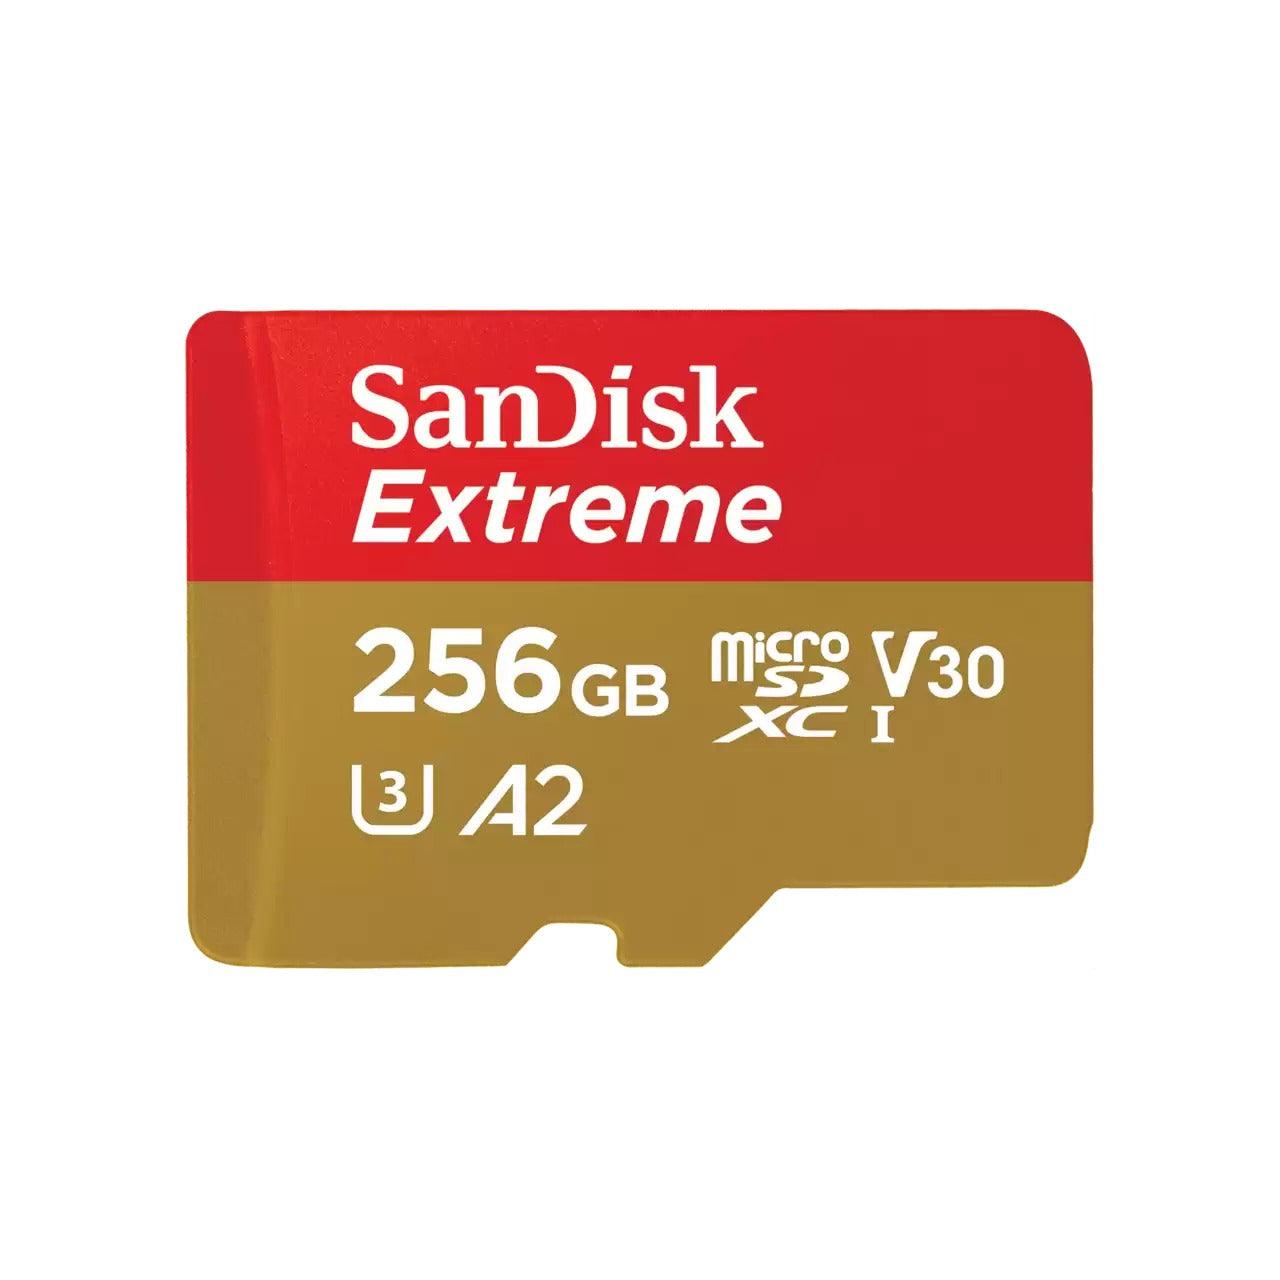 DataBlitz - Sandisk Extreme 256GB MICROSDXC Card For Mobile Gaming